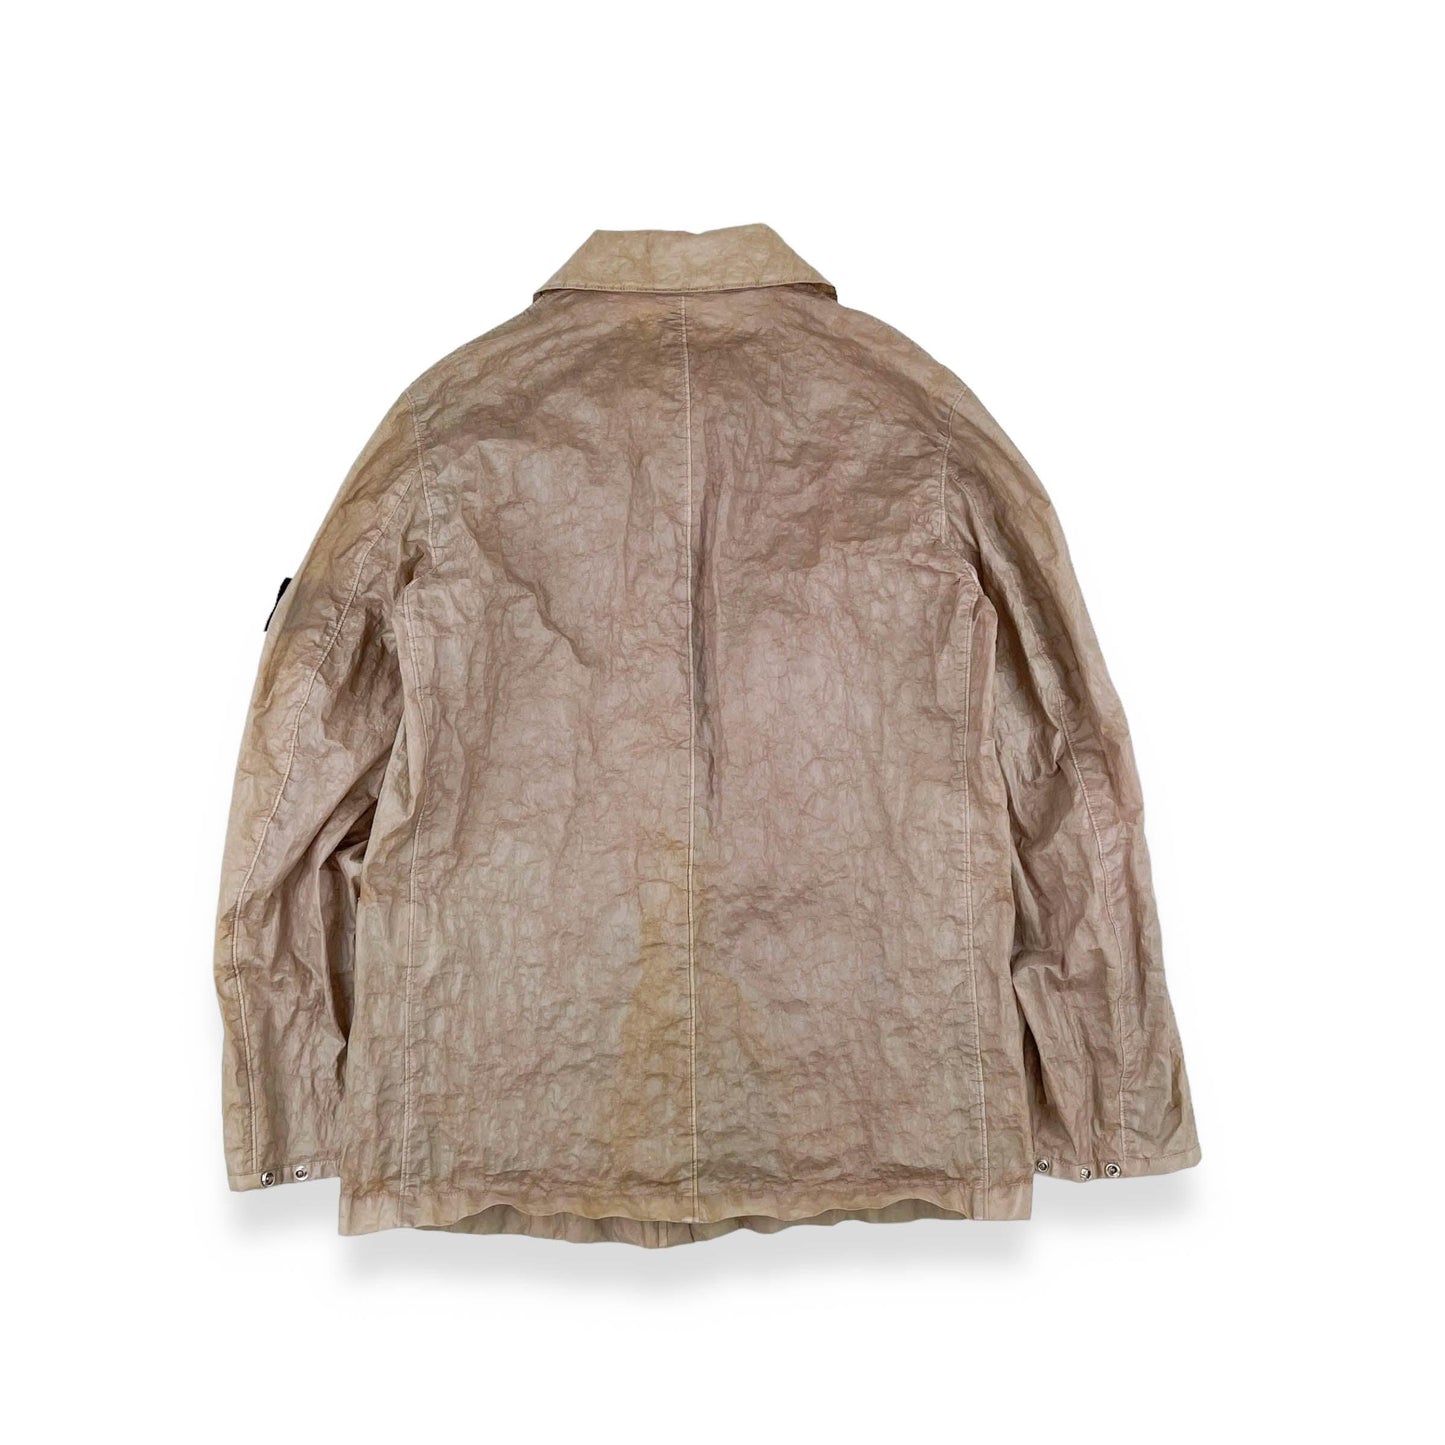 Vintage Stone Island Laminated Nylon Jacket (L) - Known Source